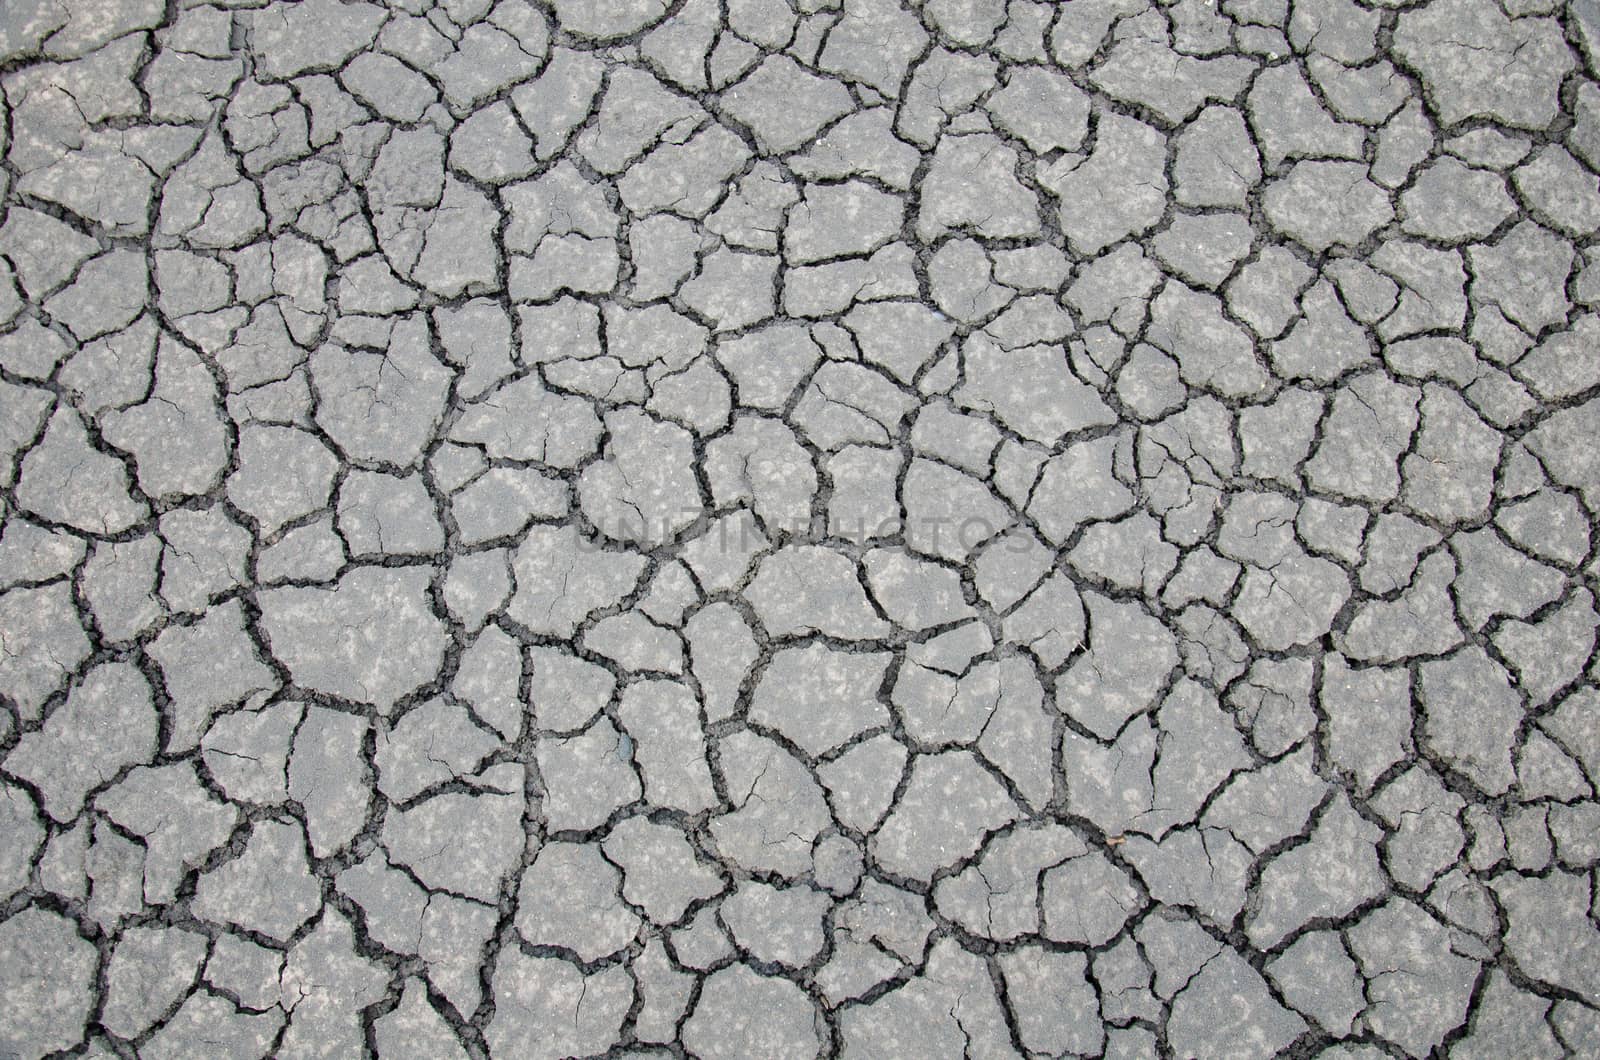 Background of soil, cracks in the dried soil in arid season.